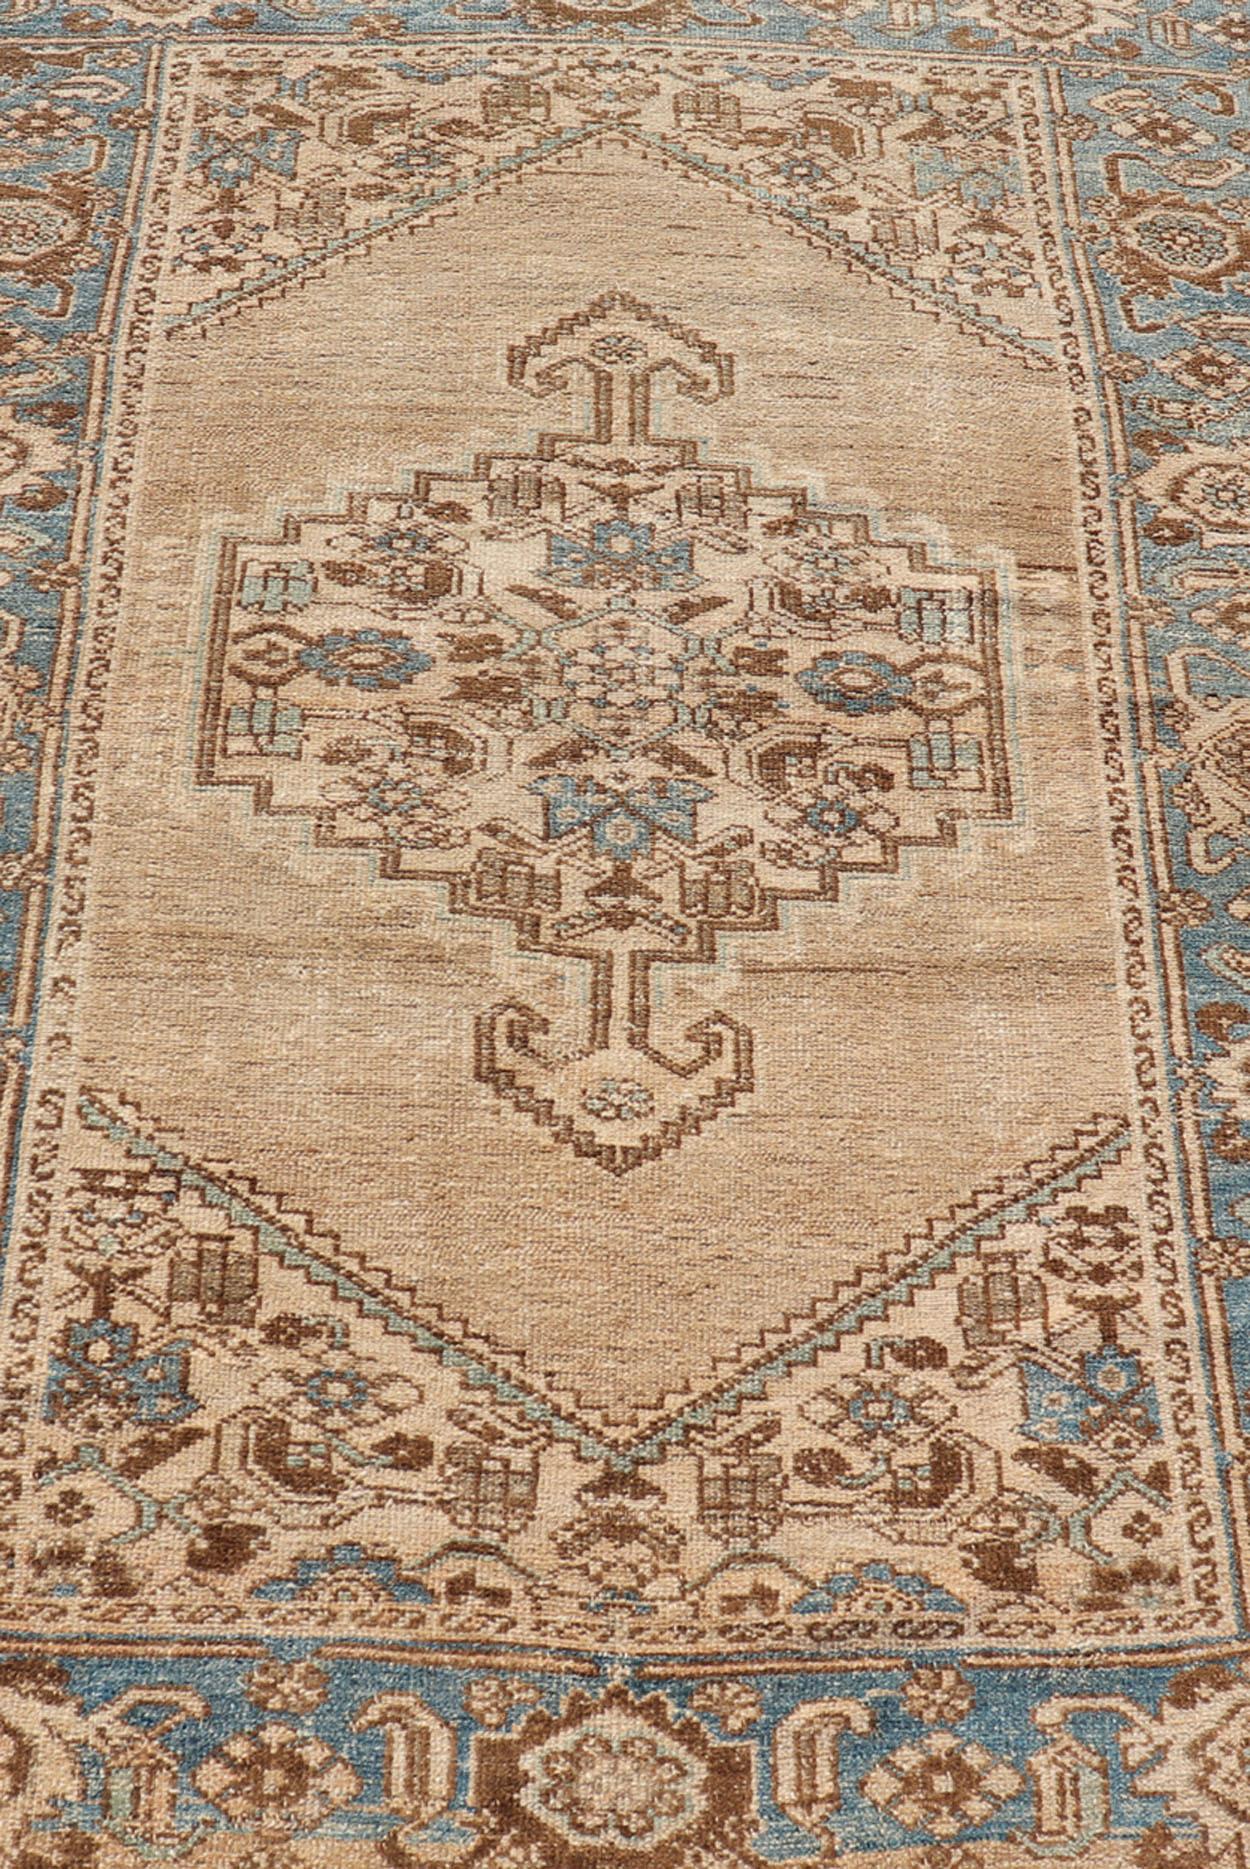 Persian Antique Hamadan small rug with Medallion Design in Tan, light Blue and brown accents. Keivan Woven Arts / rug VAS-55111, origin / type: Iran / Hamedan, circa 1920

Measures: 4'4 x 6'5 

This Hamadan rug from Persia features an elaborate